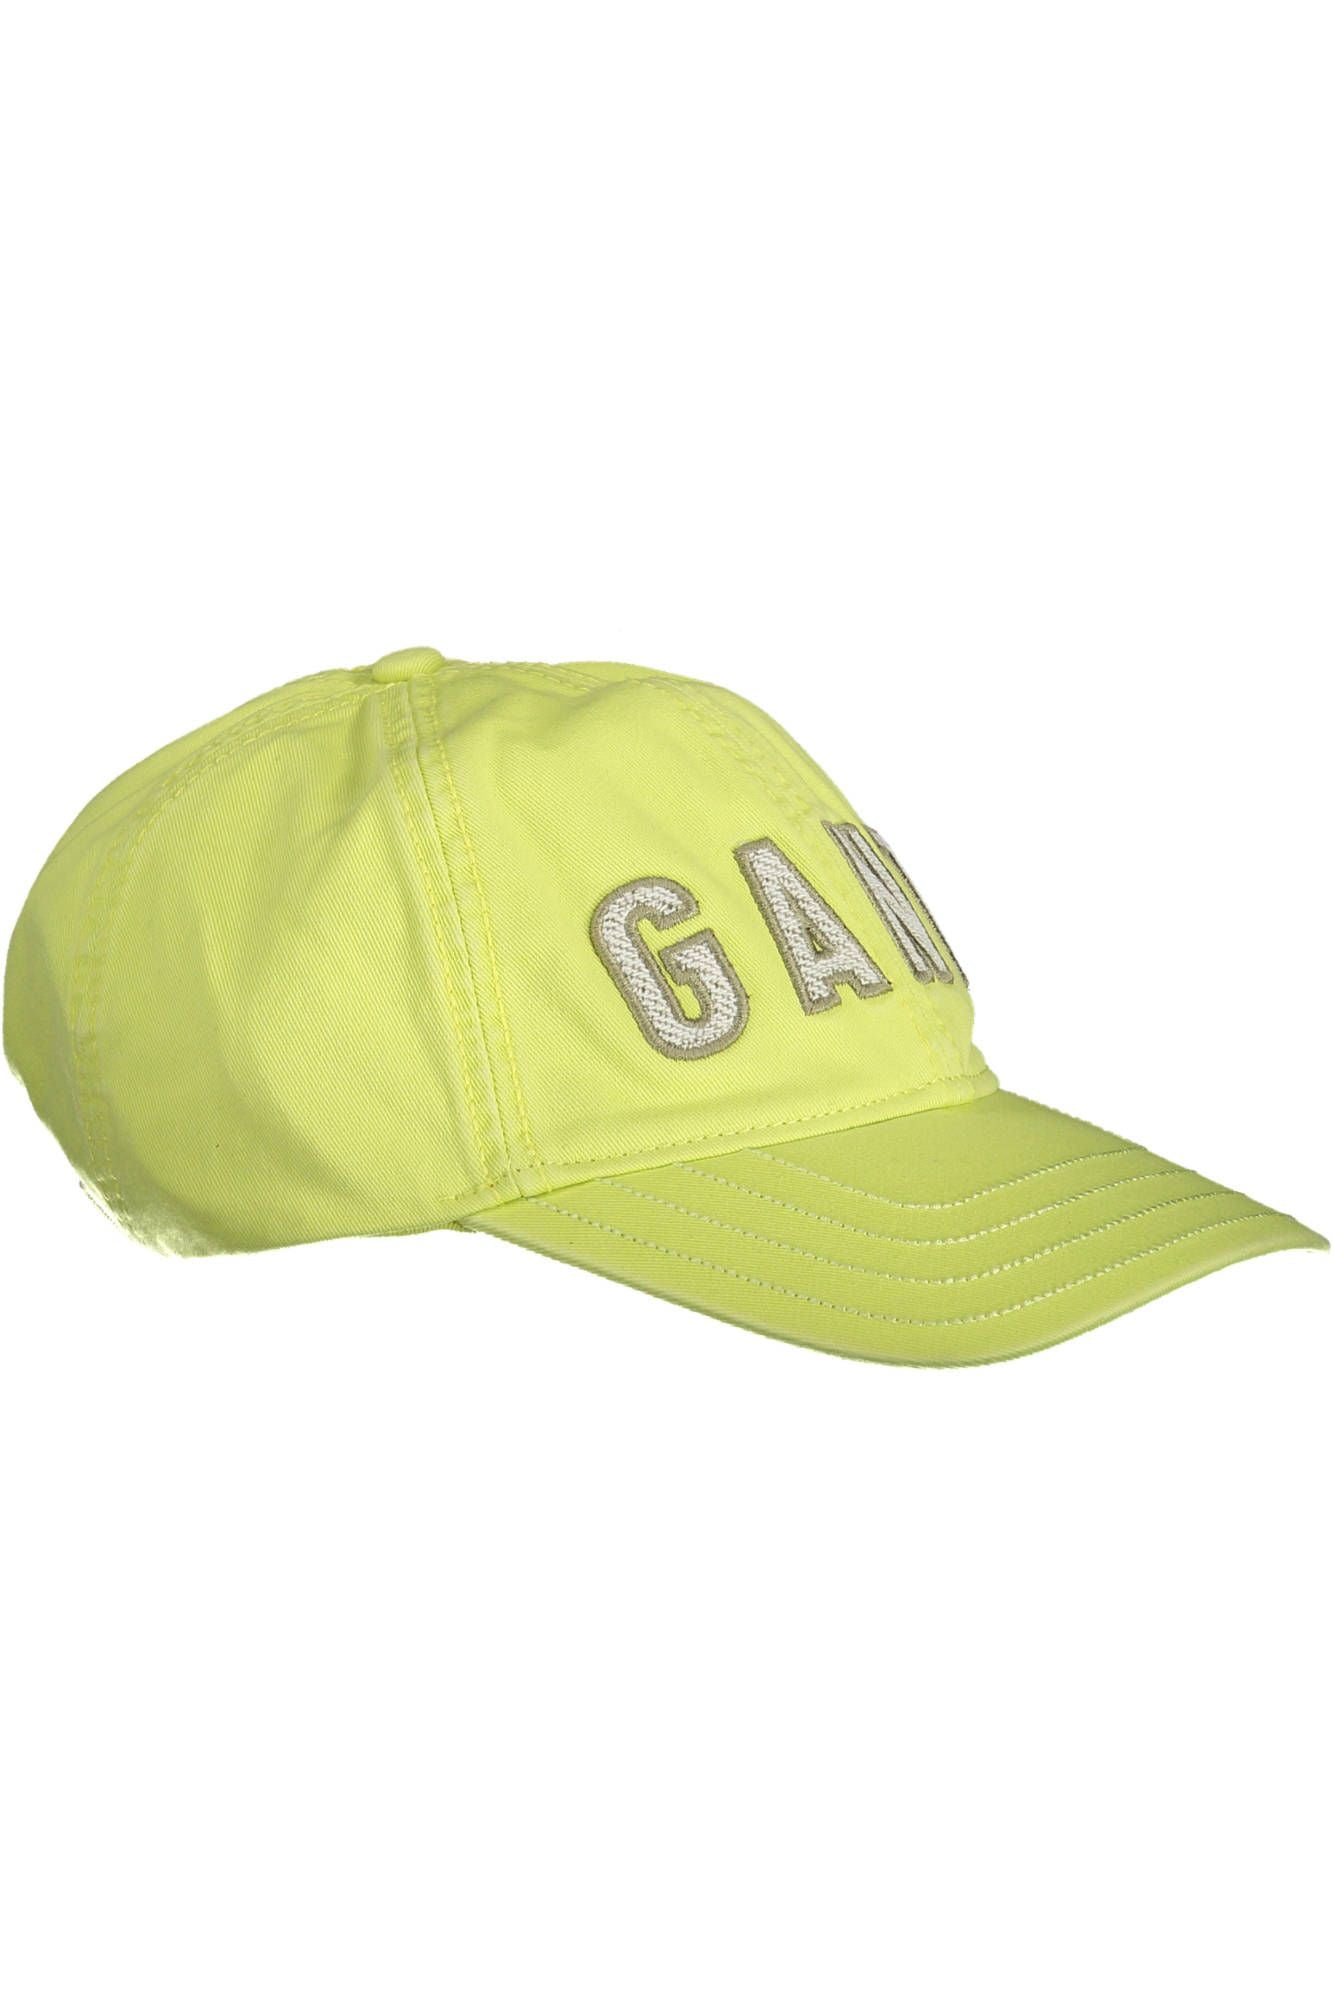 Chic Organic Cotton Visor Hat in Vibrant Yellow